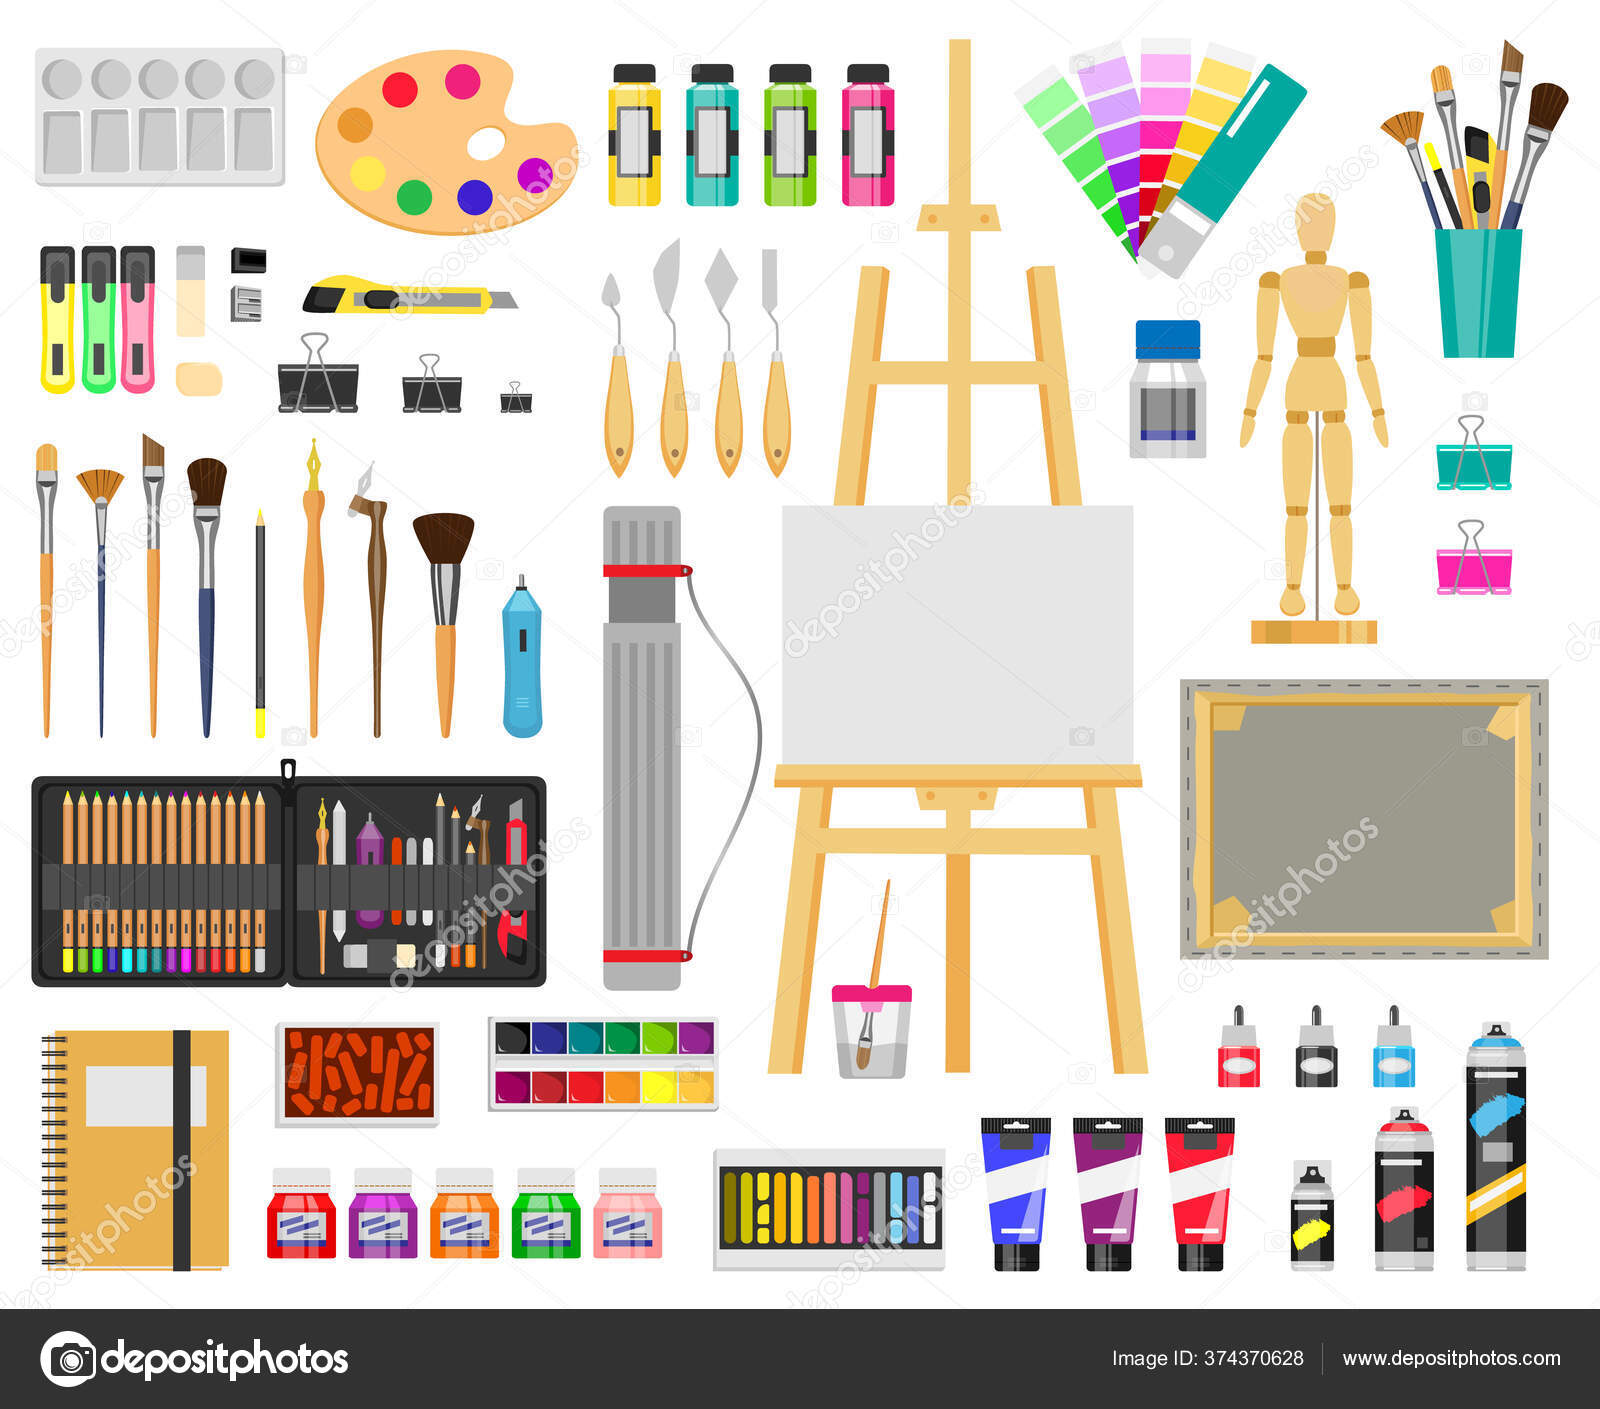 https://st3.depositphotos.com/29135220/37437/v/1600/depositphotos_374370628-stock-illustration-paint-art-tools-artistic-supplies.jpg